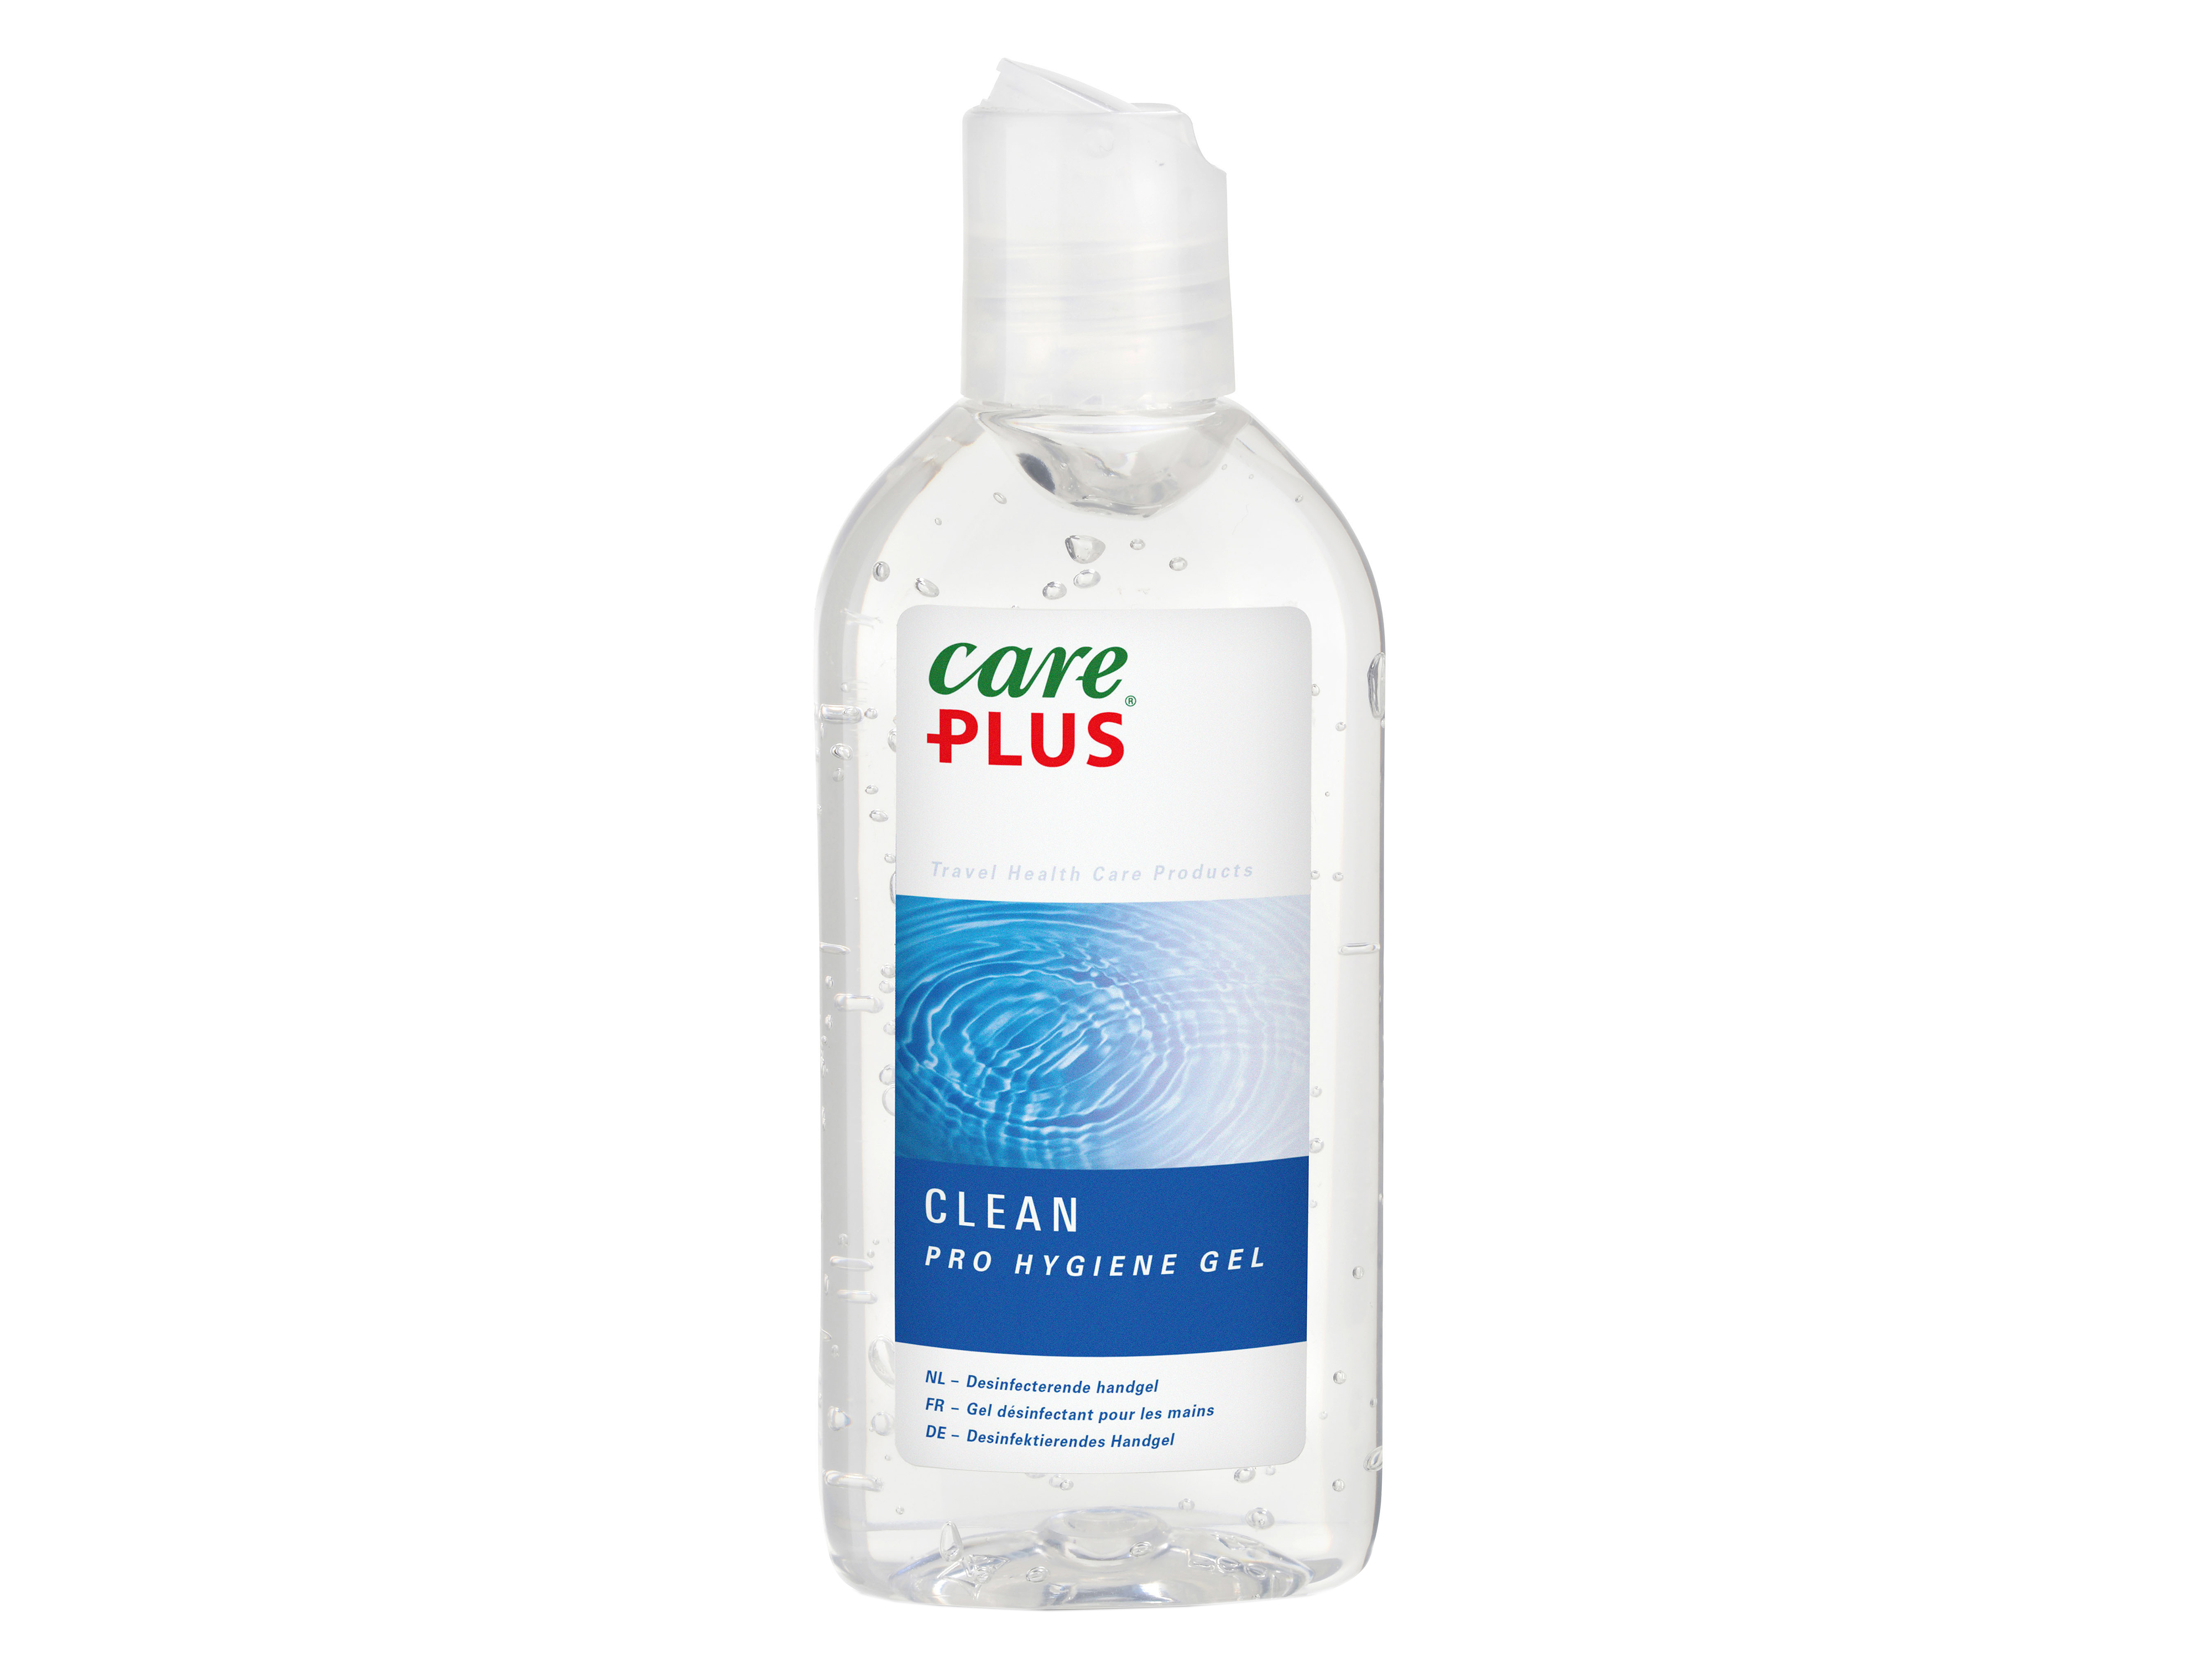 Care Plus Pro Hygiene Gel, 100 ml